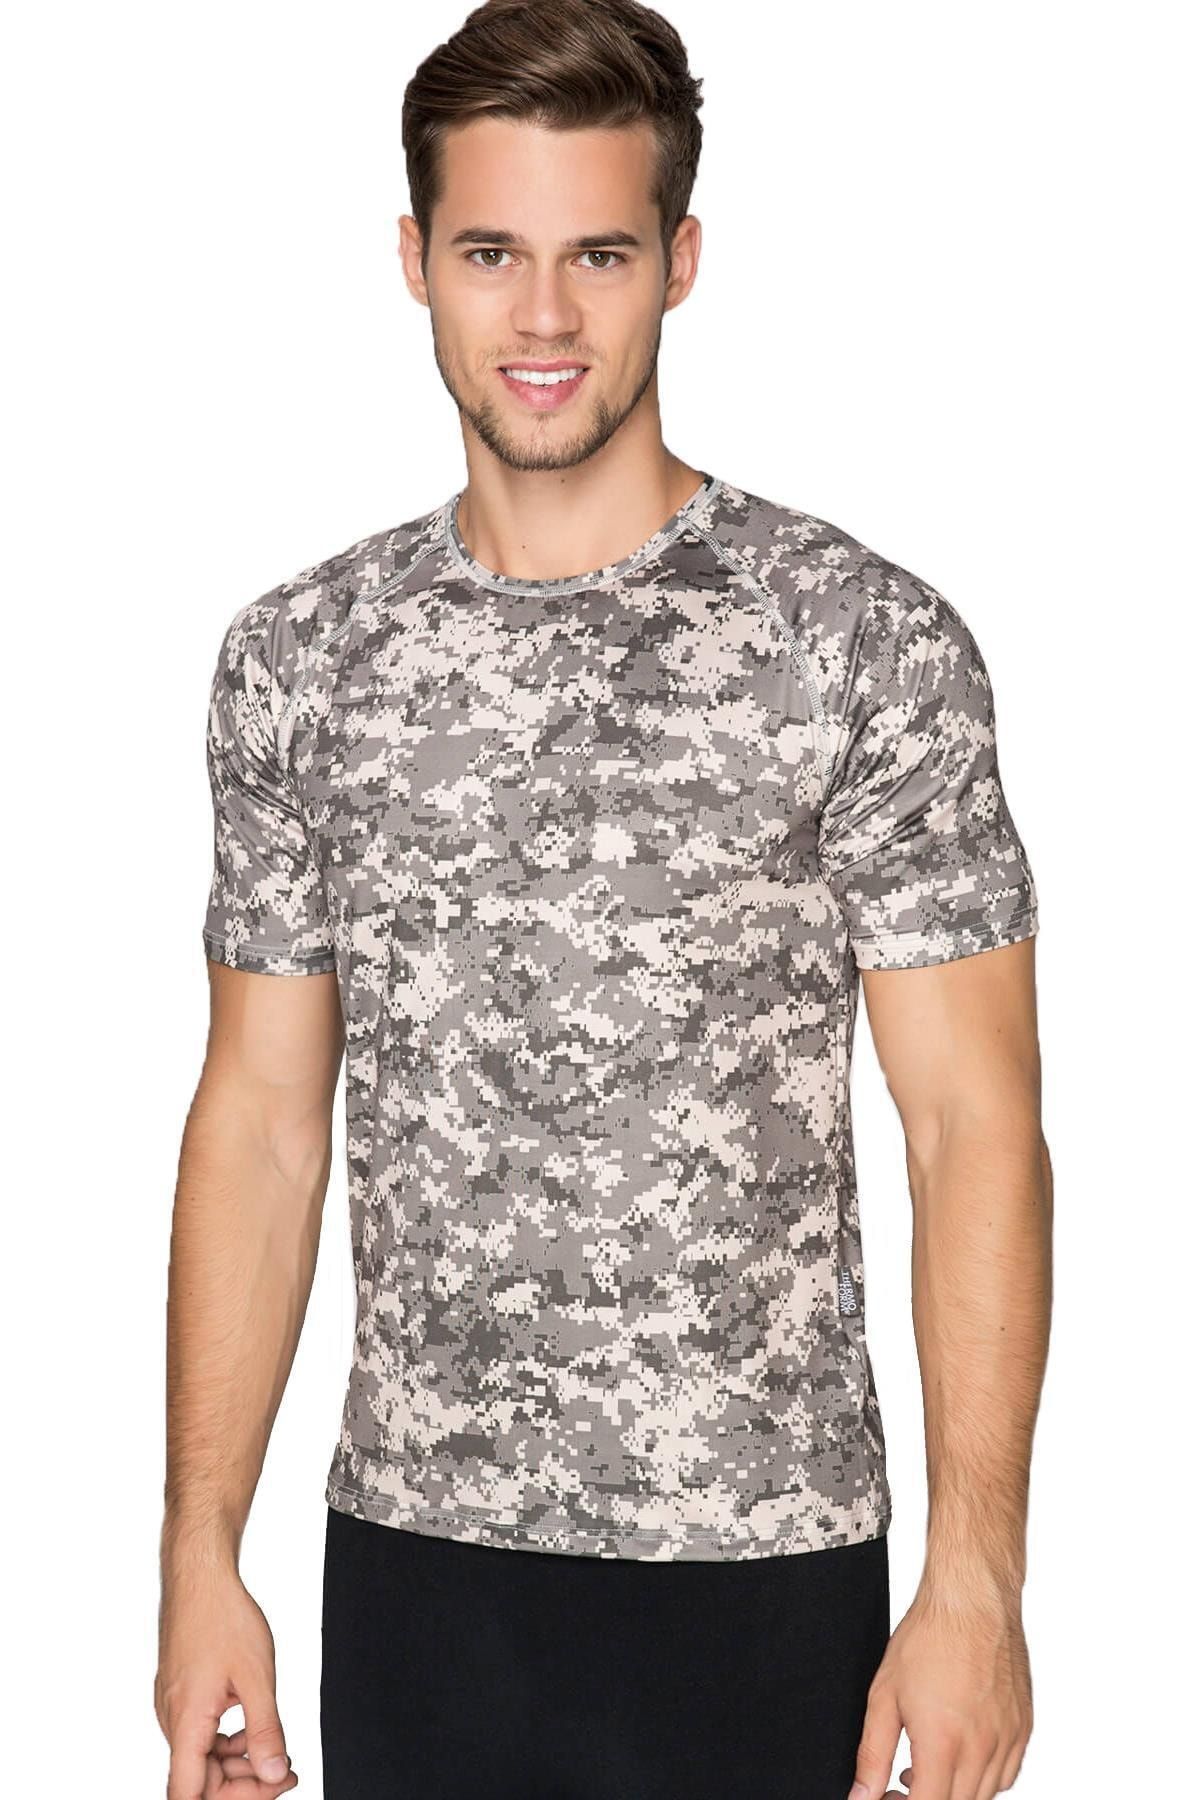 Thermoform Erkek Termal T-shirt Krem (Hzt1805-krm)